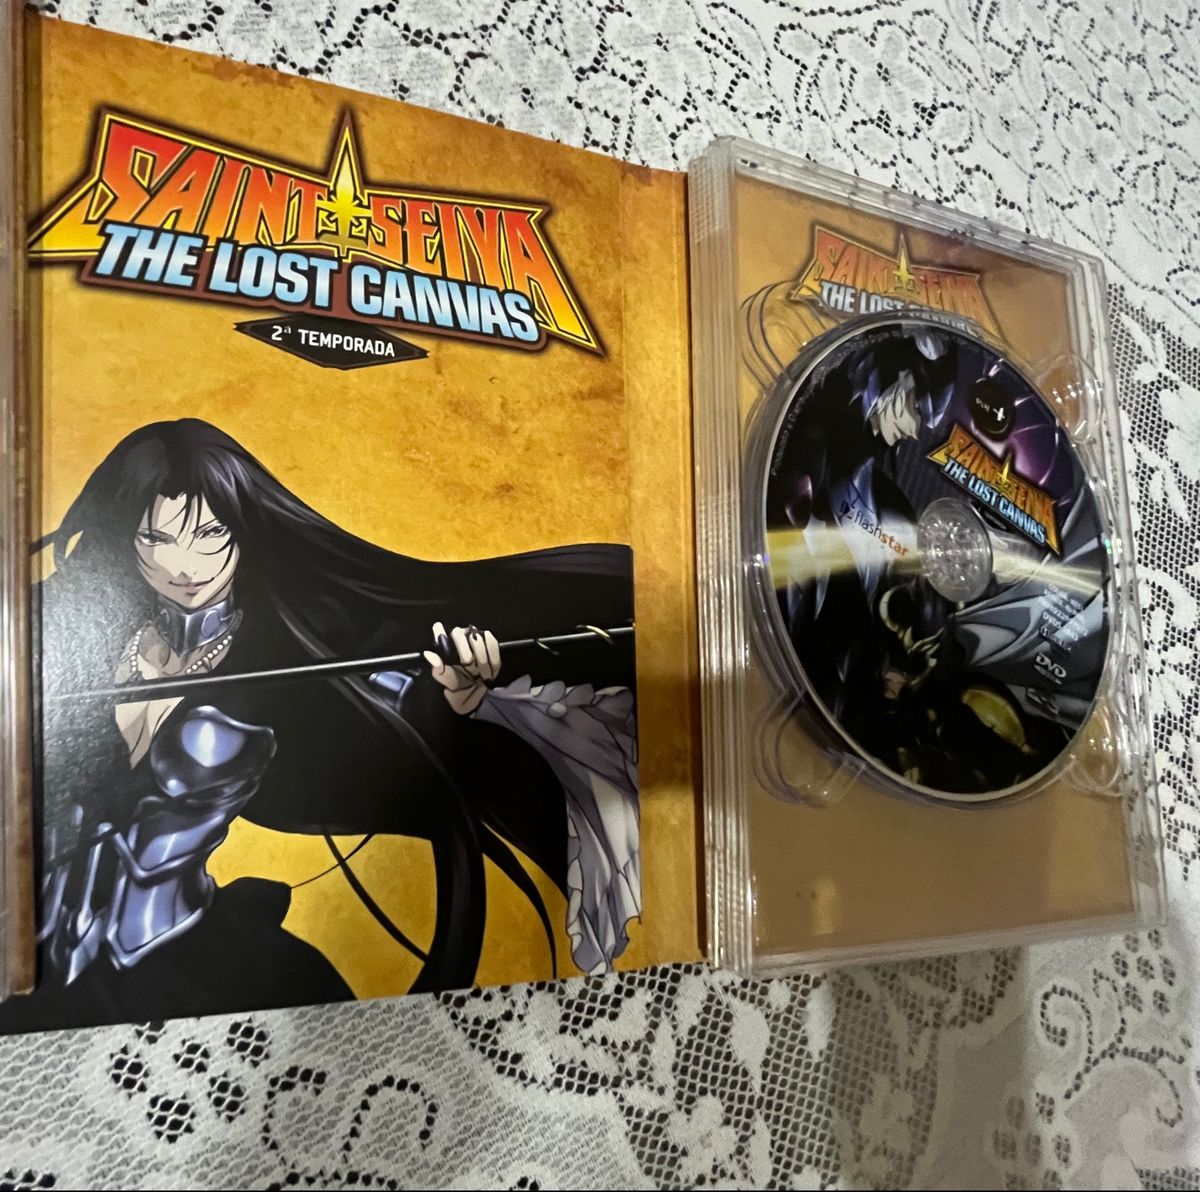 Cavaleiros Zodíaco Lost Canvas Saint Seiya 6 Dvds Volume 1+2